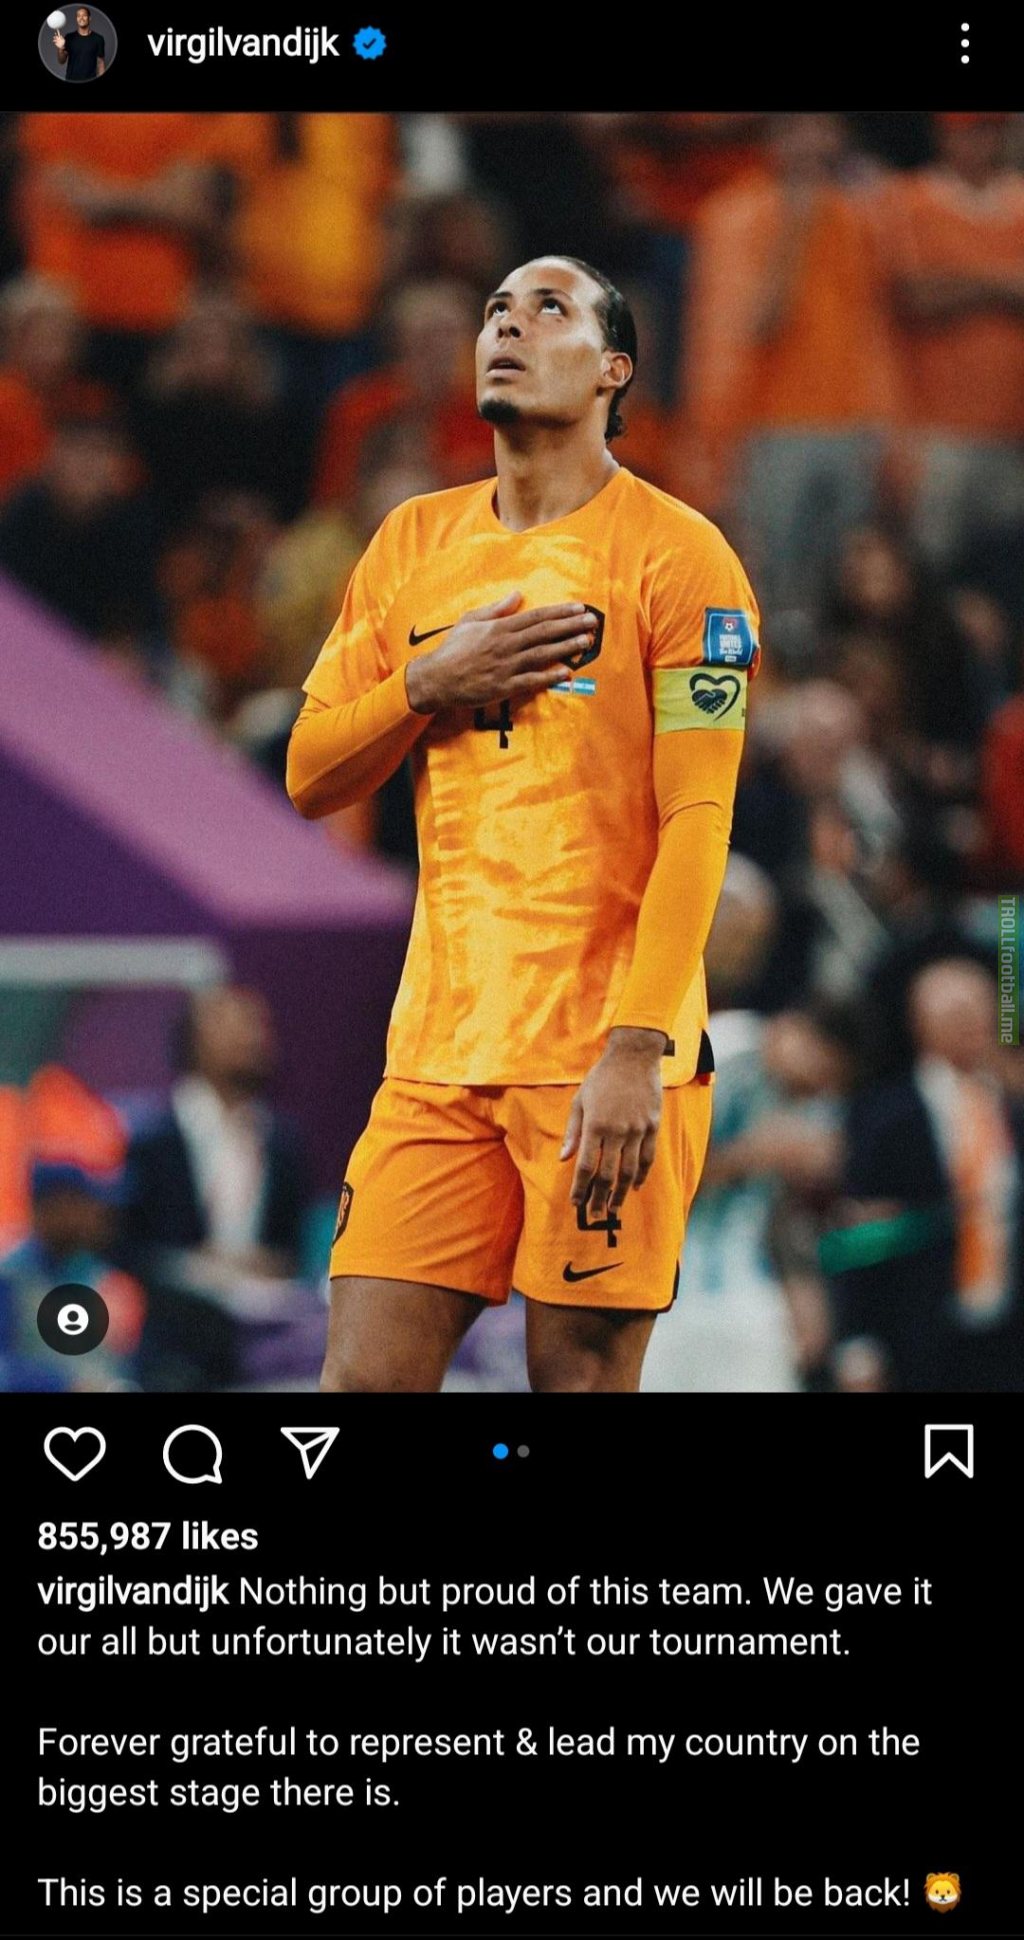 Virgil Van Dijk On Instagram after World Cup exit